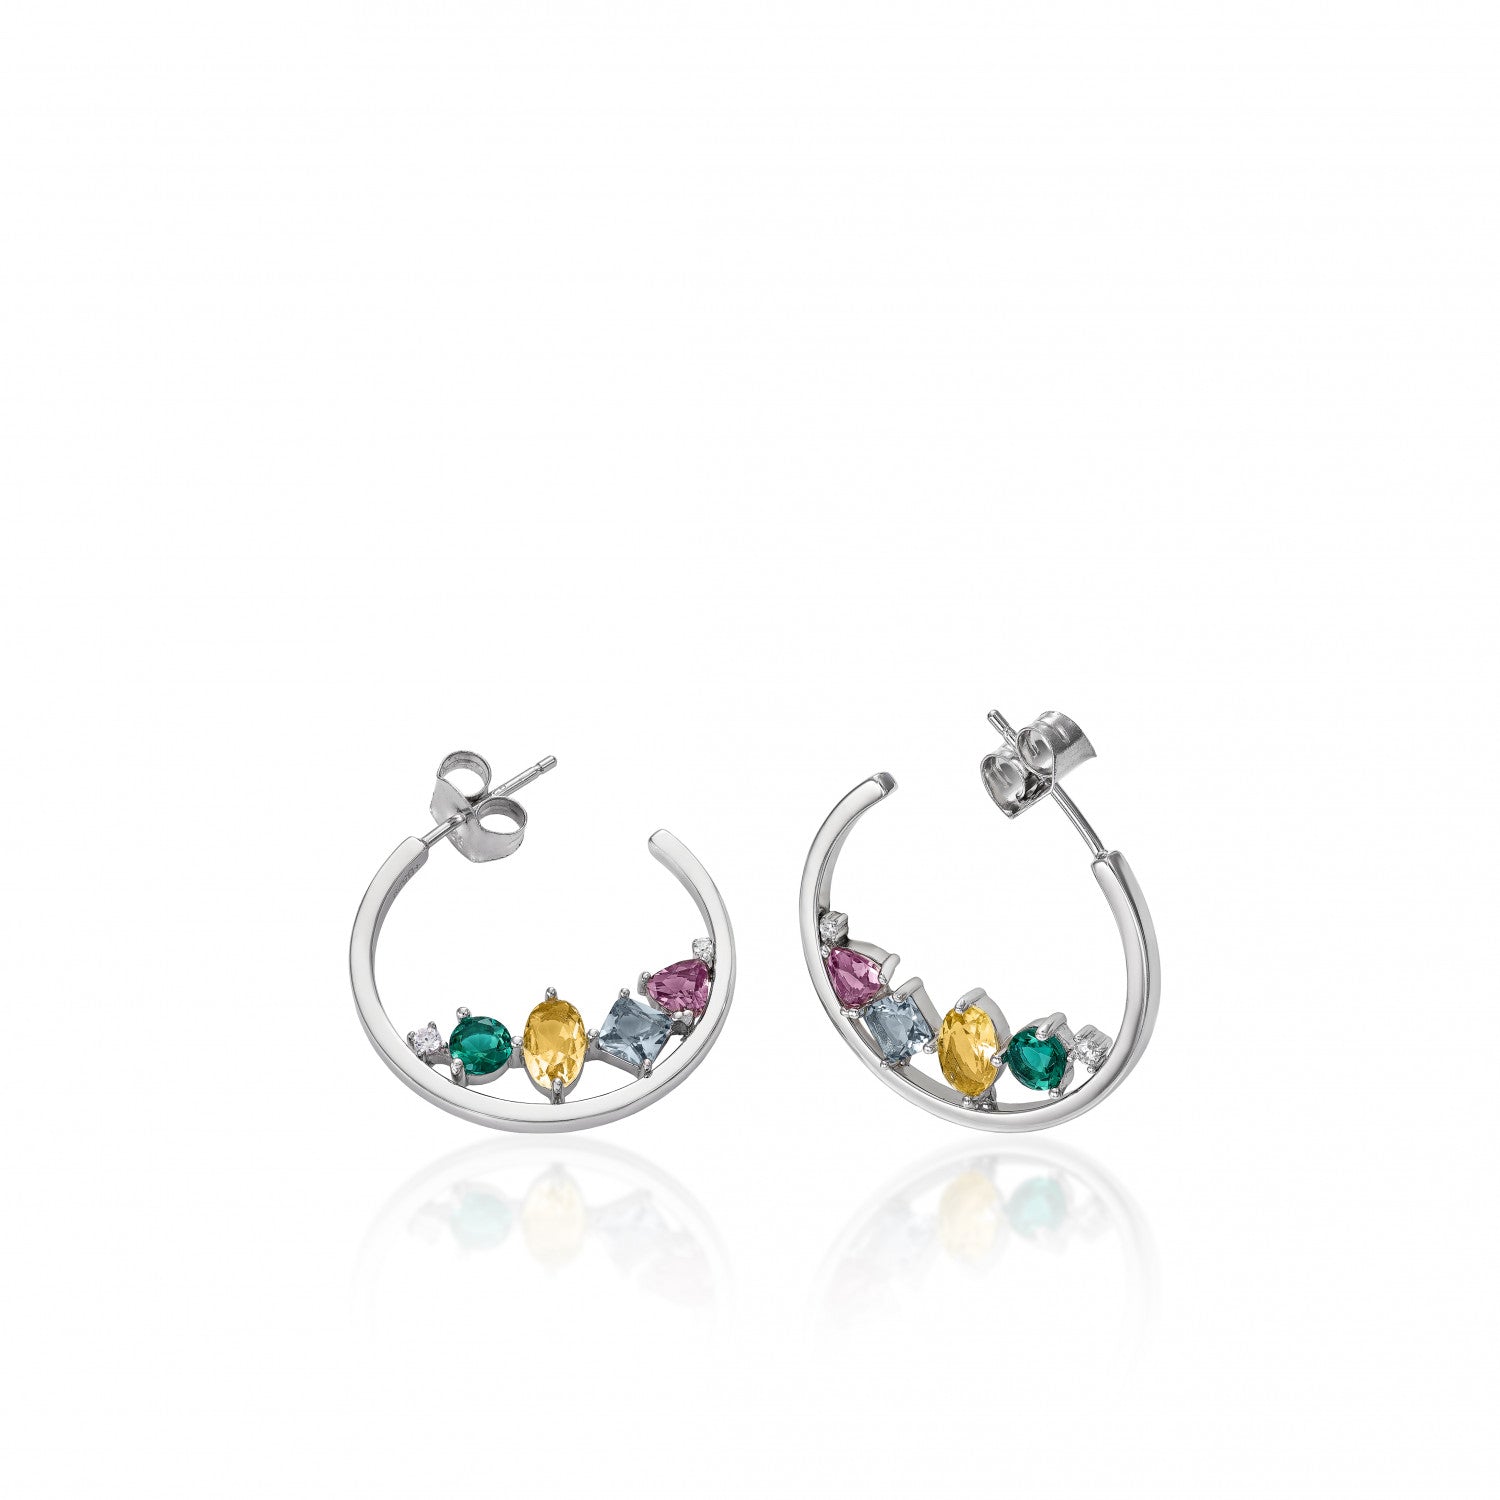 Earrings - Hoop earrings with multicolored mosaic stones and zircons